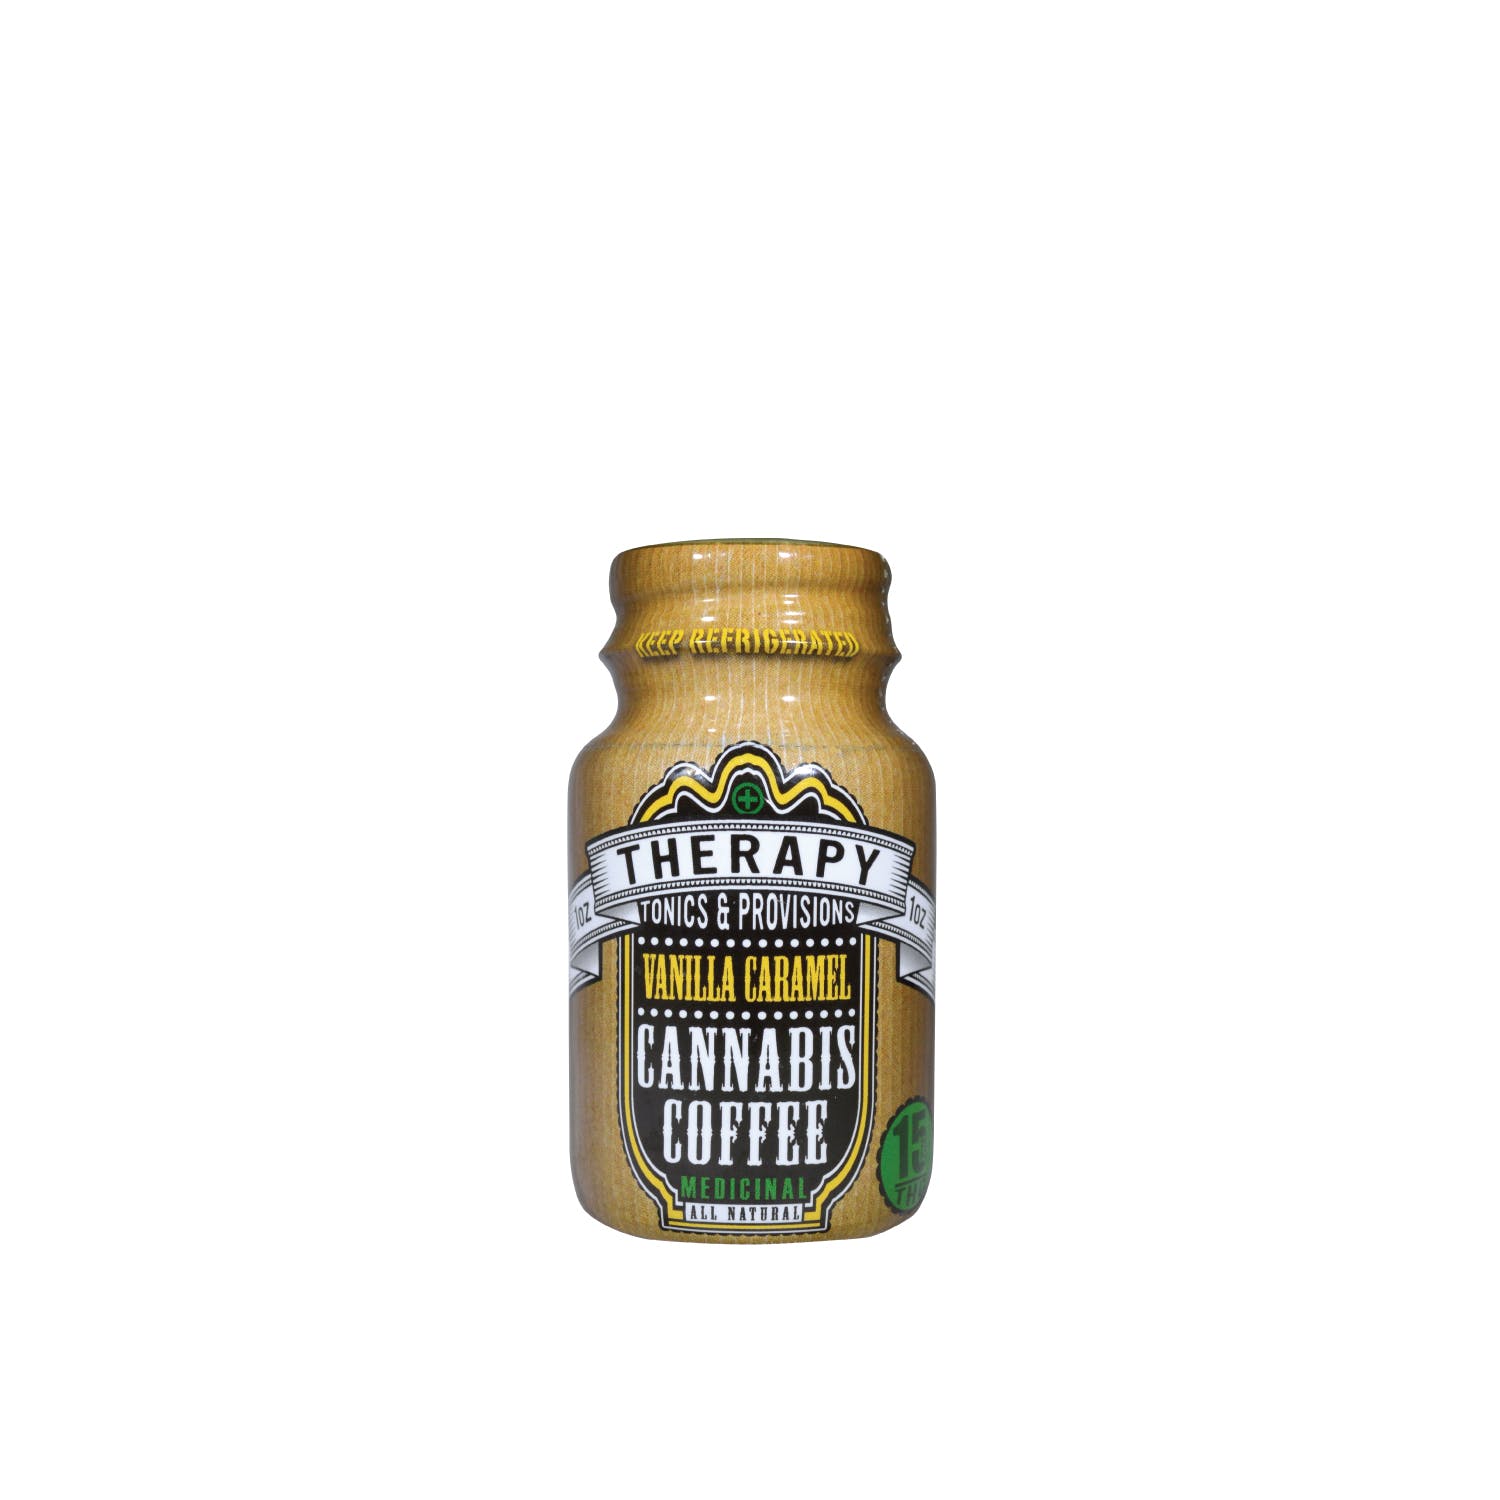 Vanilla Caramel Coffee (Sativa), 15mg